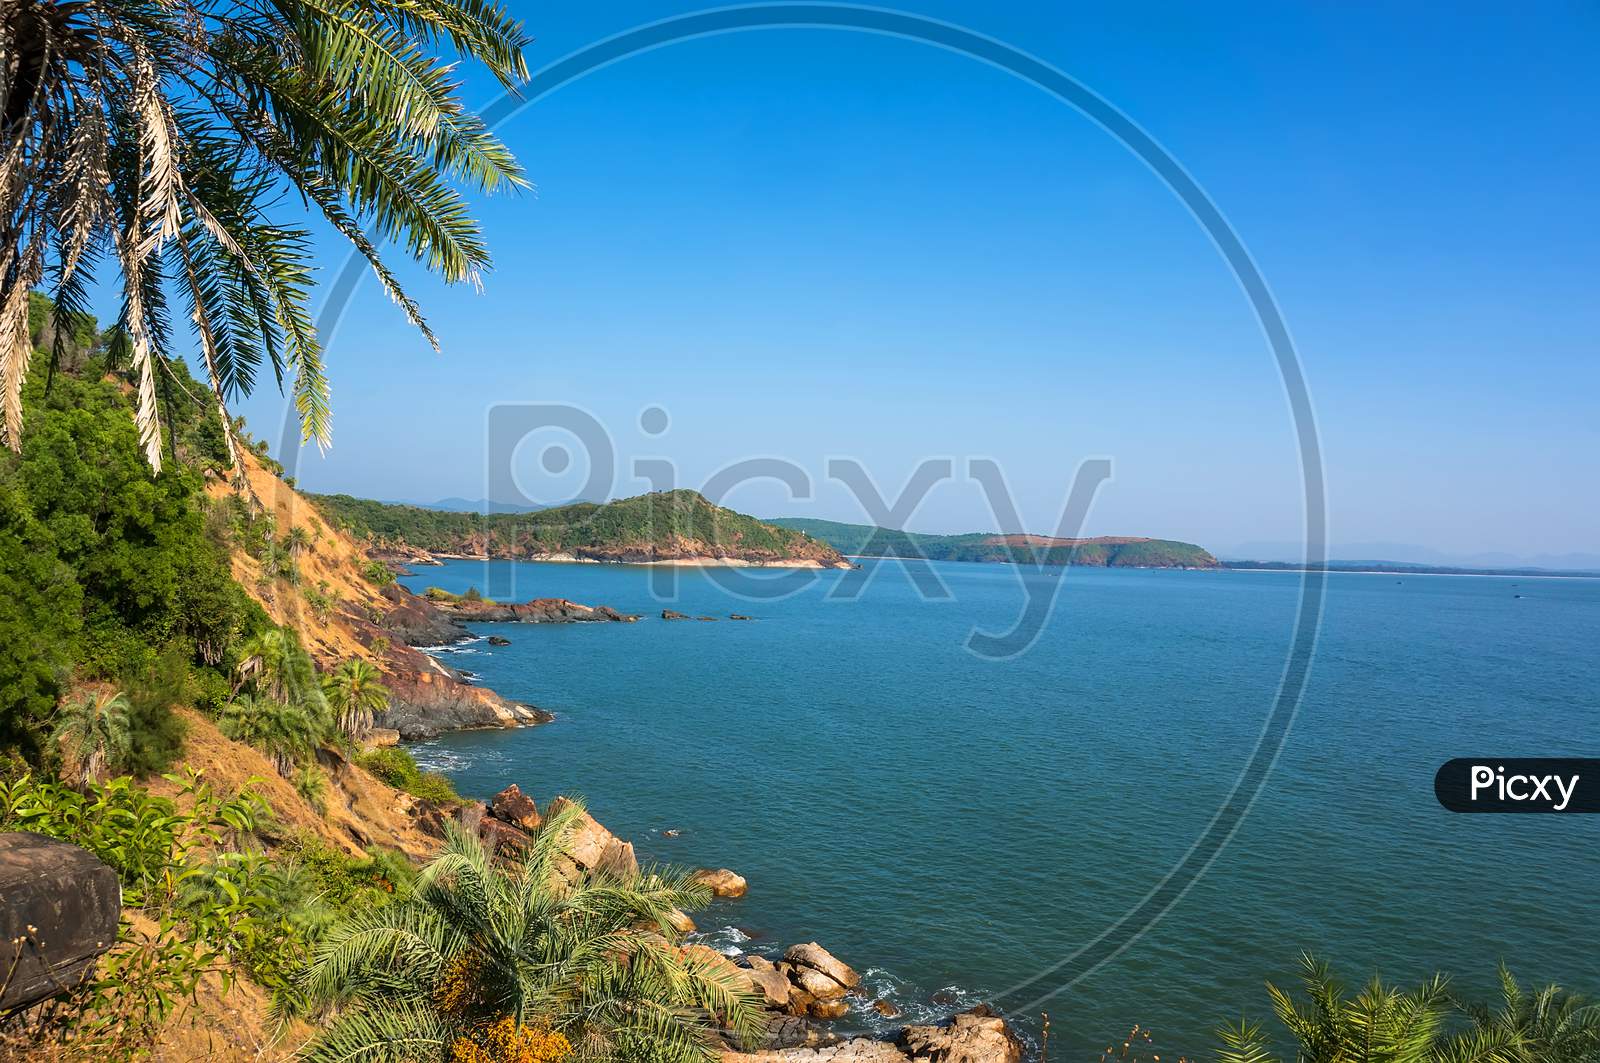 The Scenery Is Beautiful Rocky Coast With Palm Tree, Blue Sea And Cloudless Sky In Om Beach, Karnataka, India